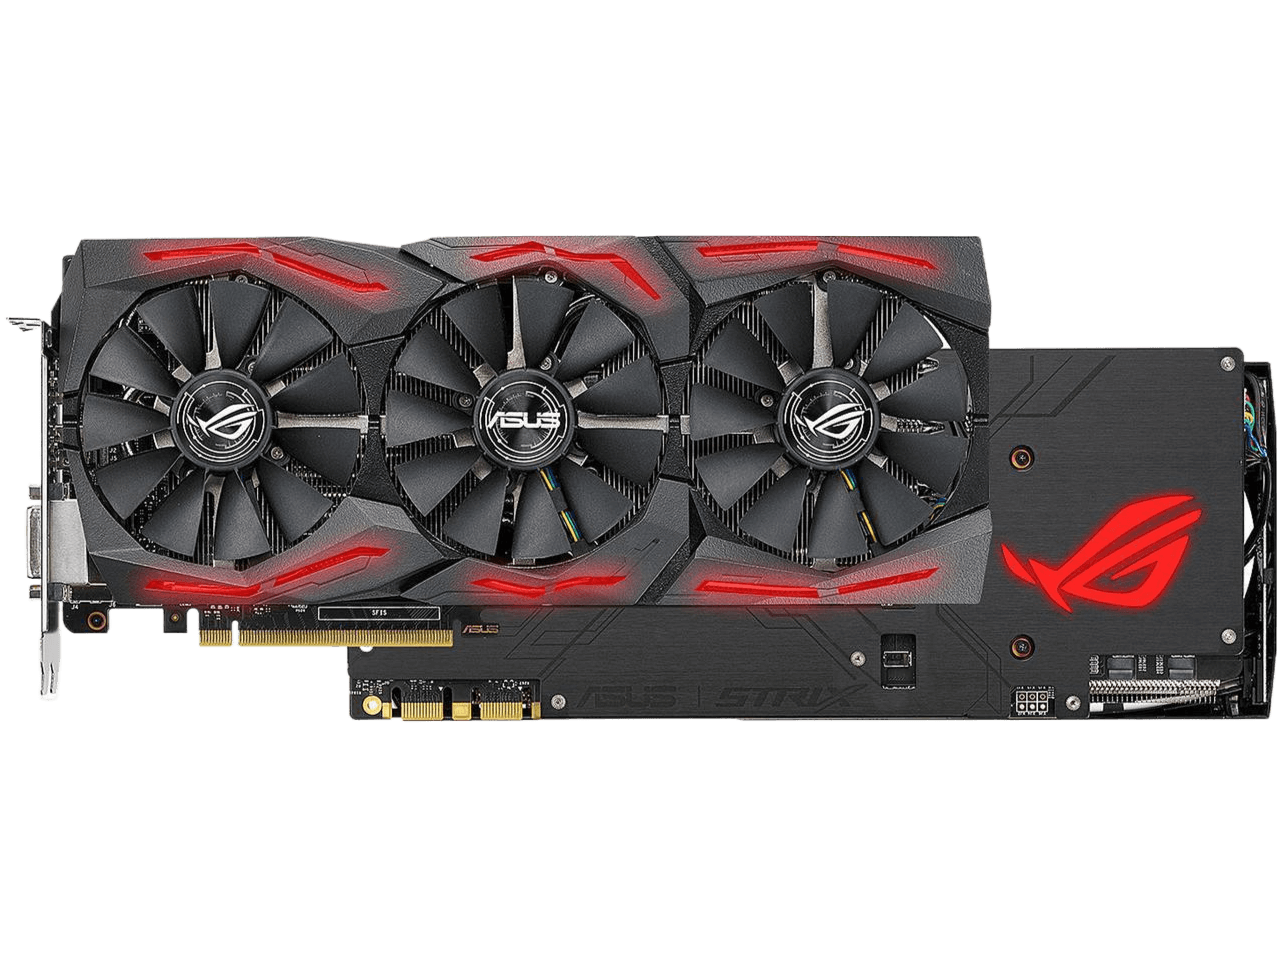 ASUS ROG STRIX AMD Radeon RX 5600 XT OC Edition Gaming Graphics Card F